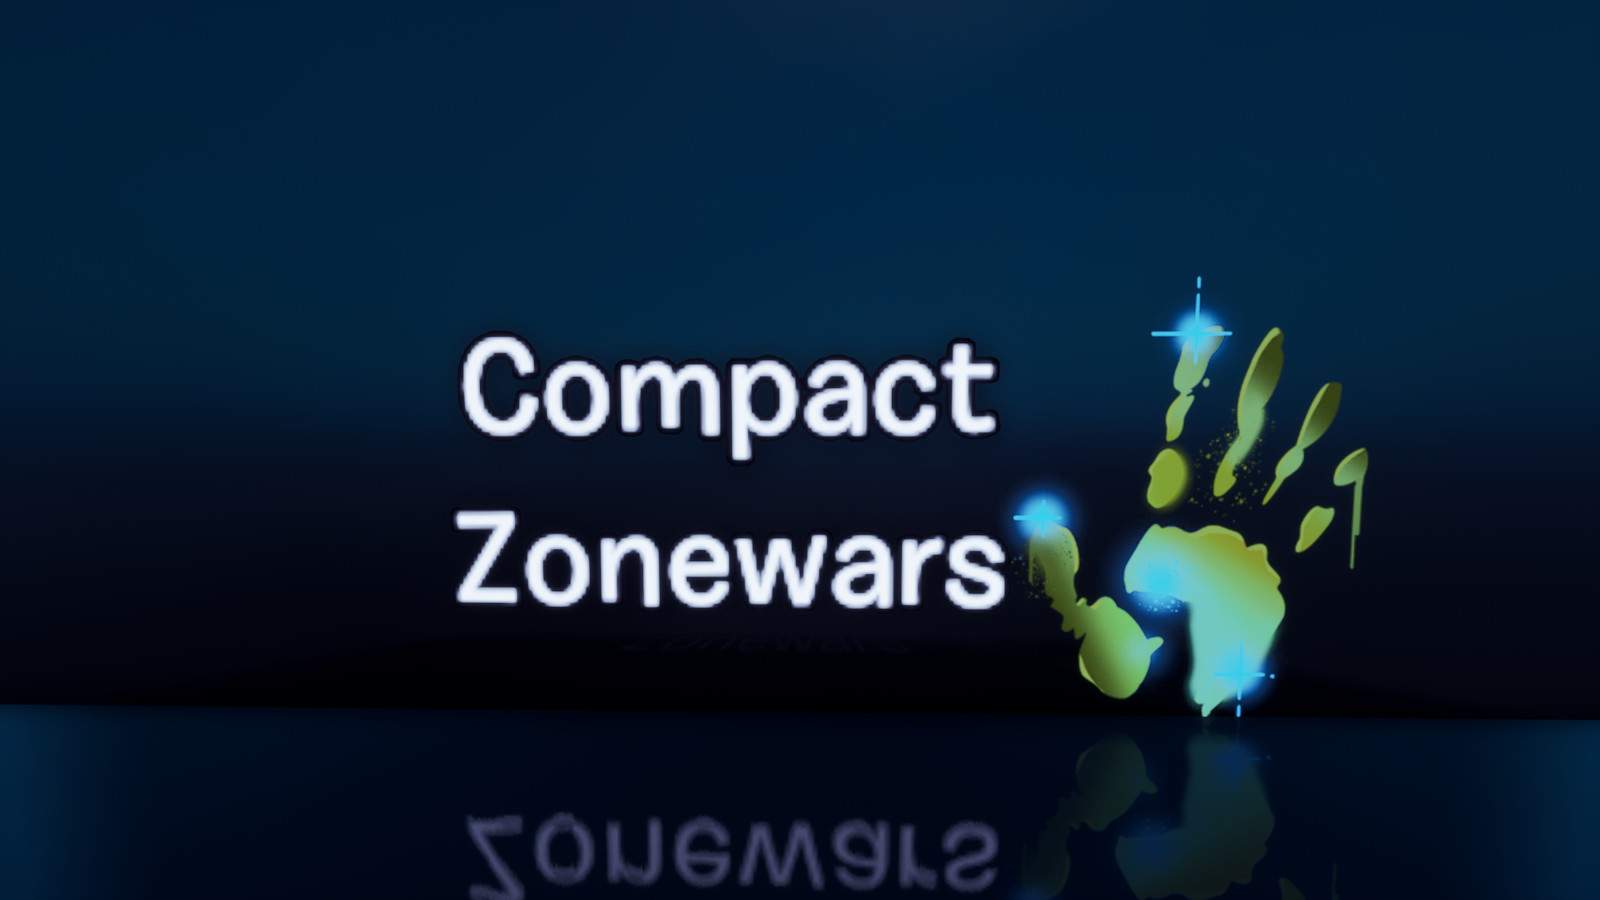 Compact Zonewars